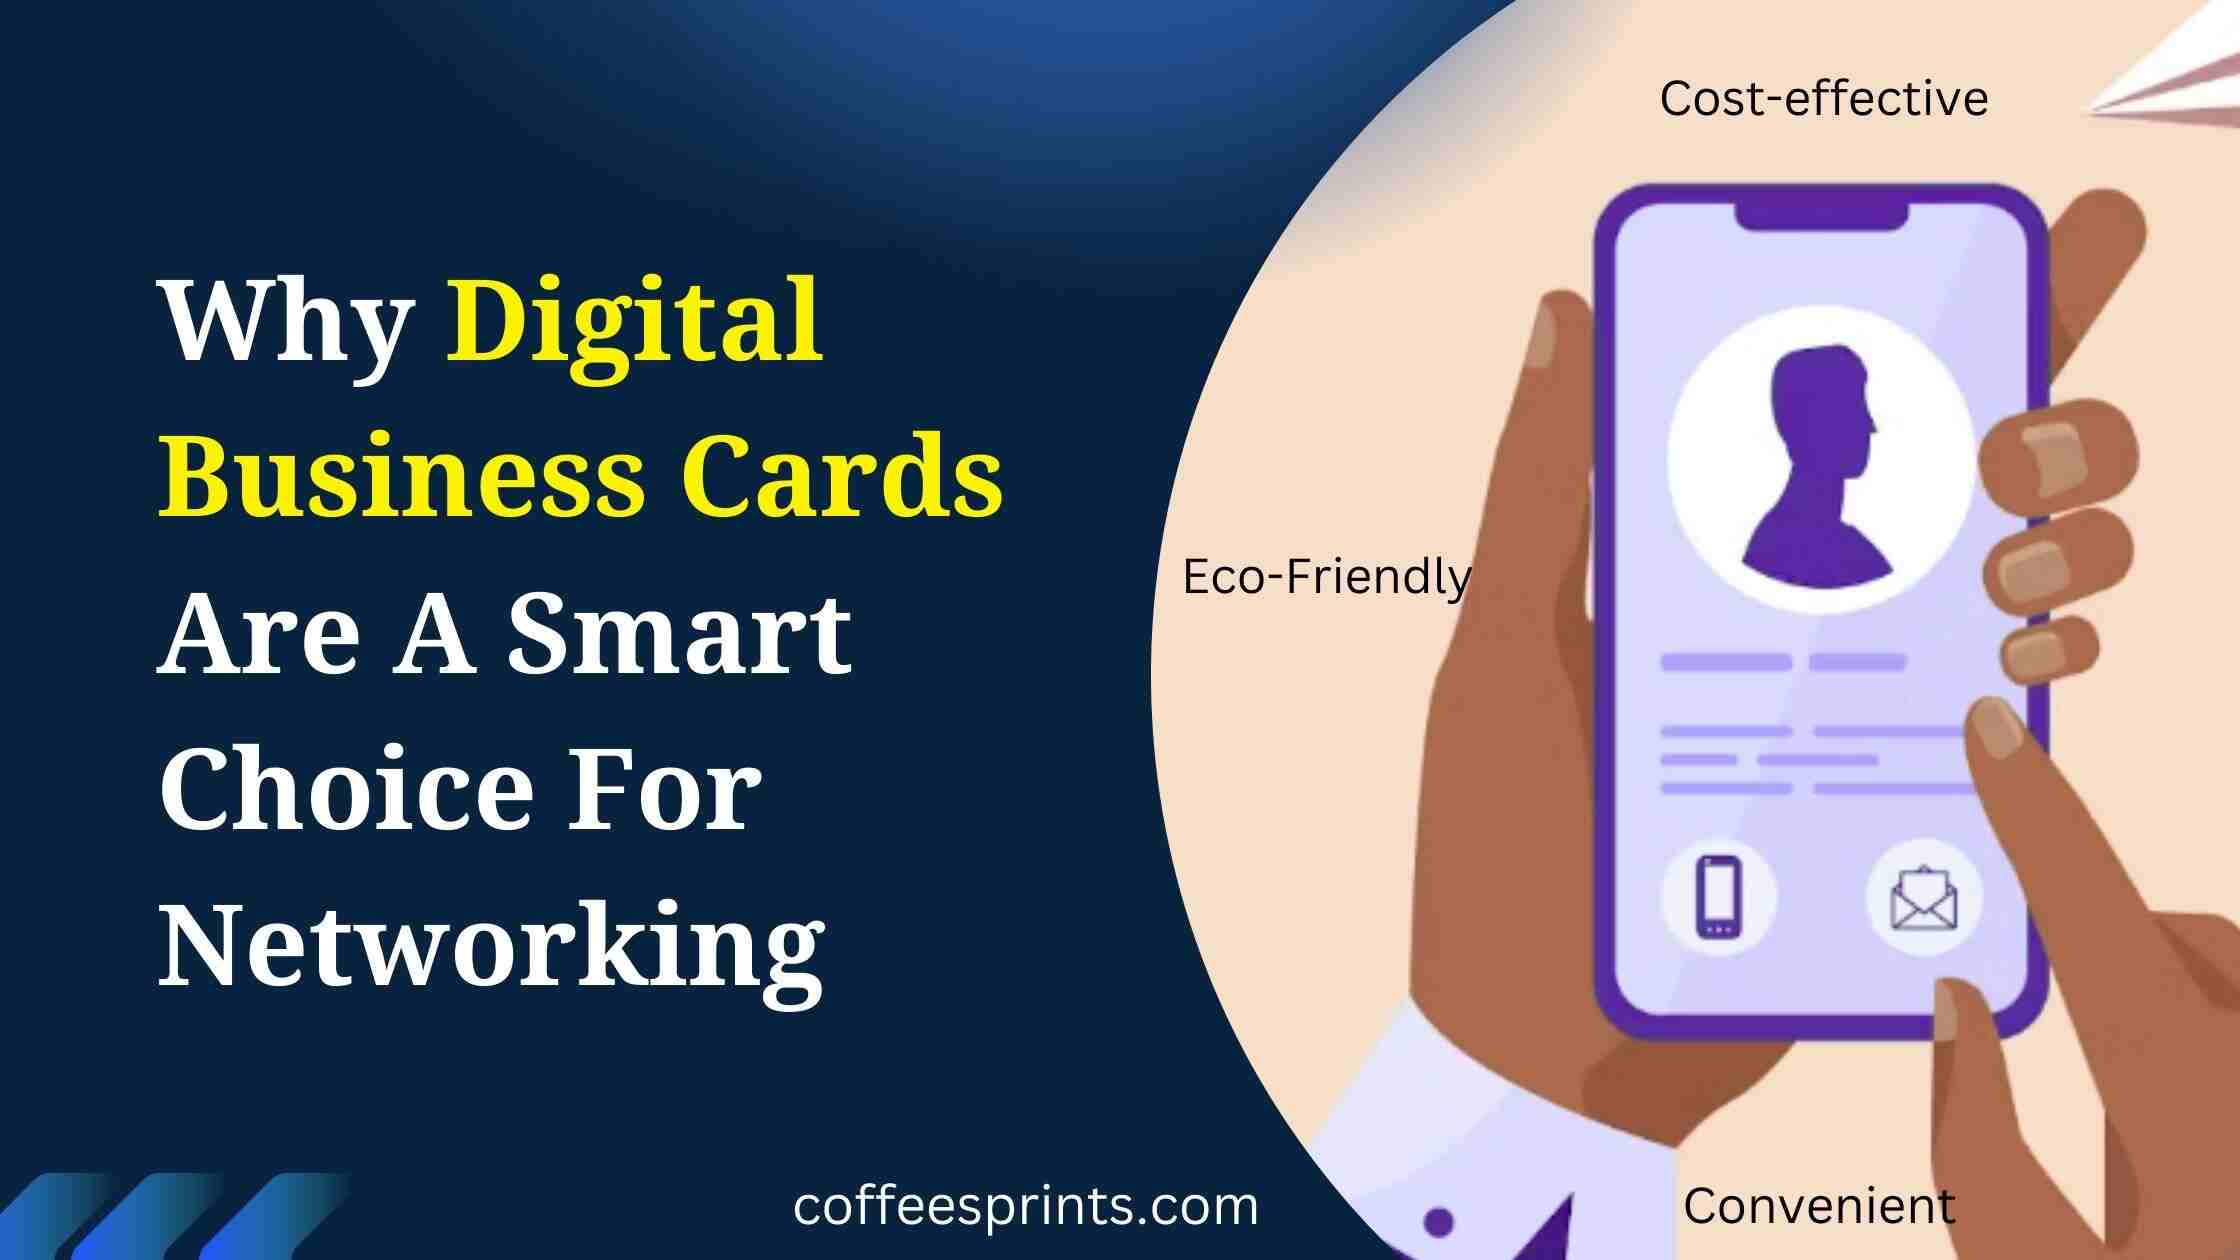 Benefits of digital business cards